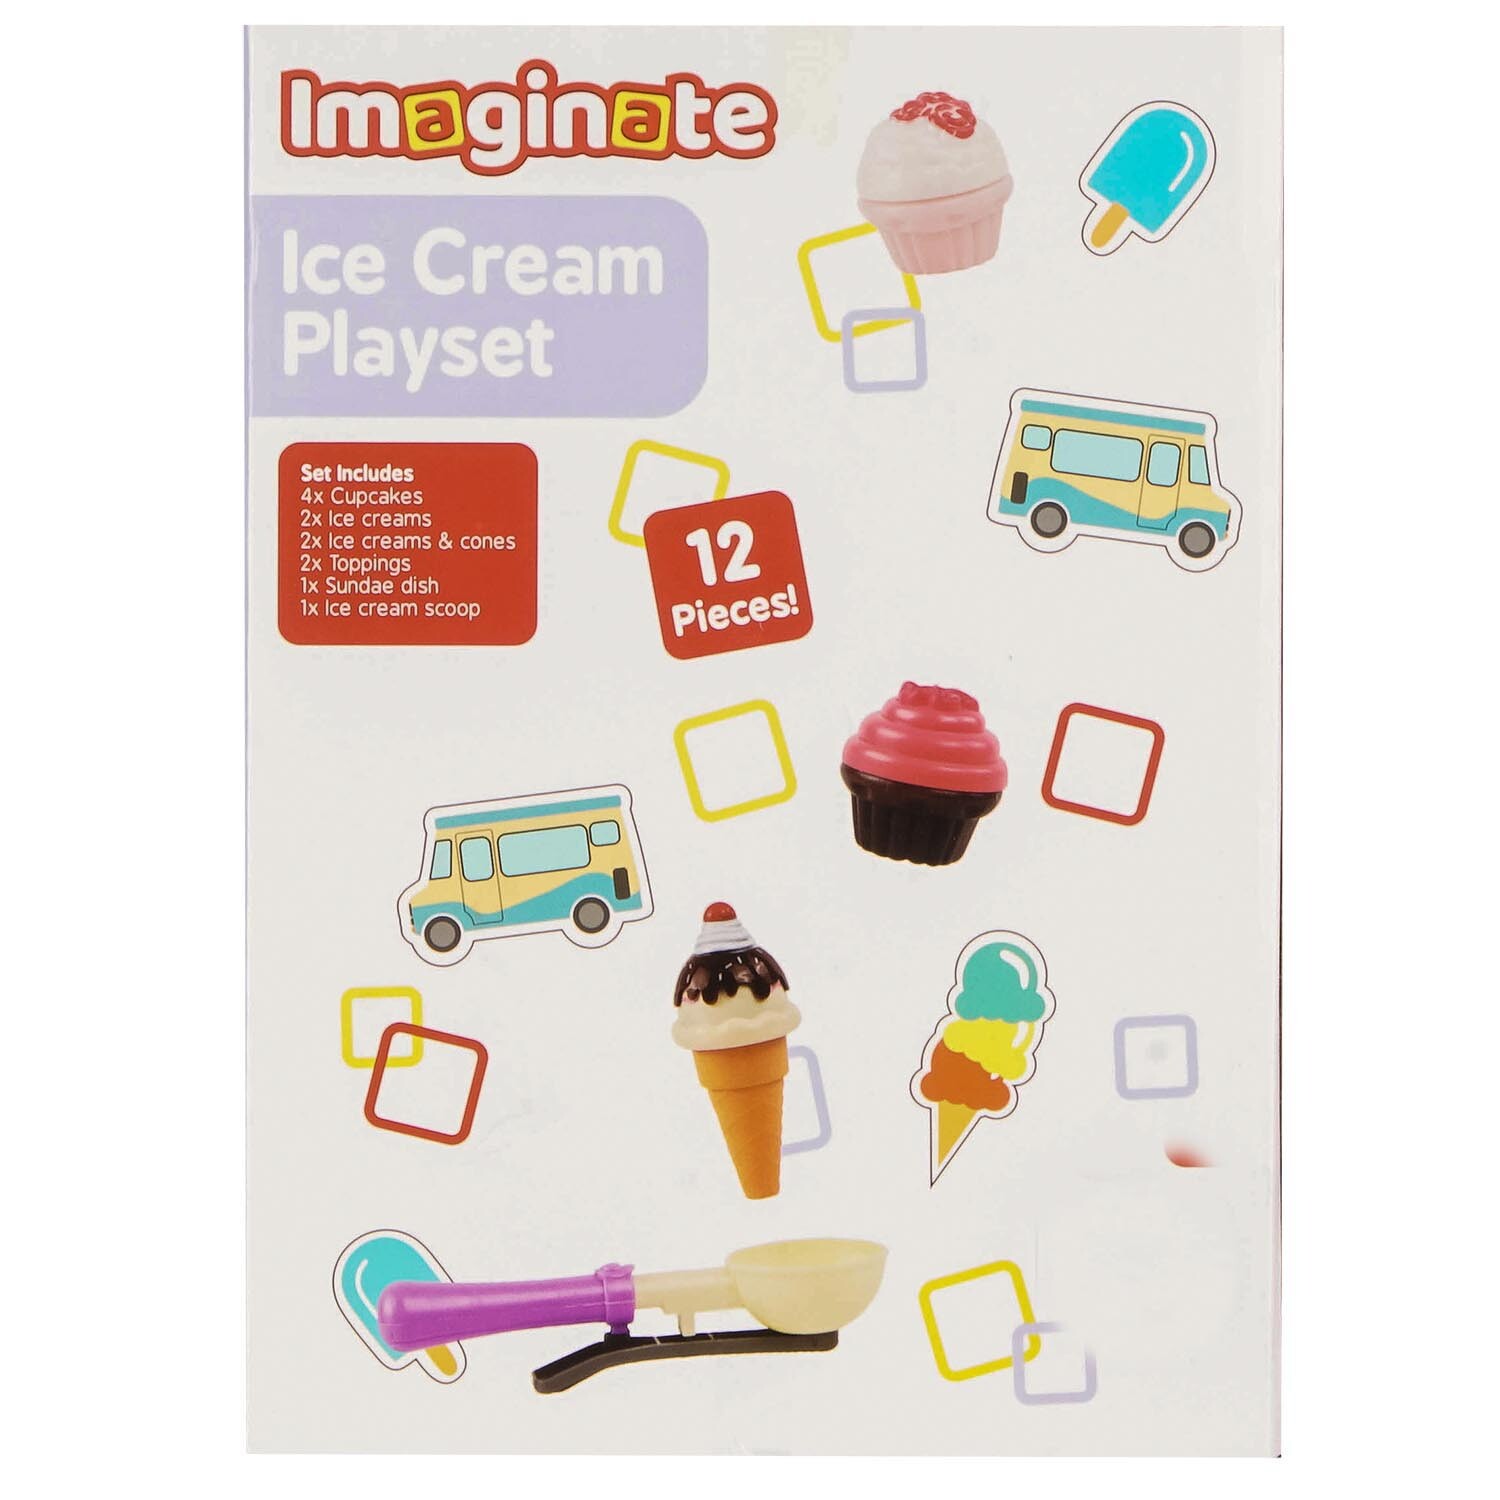 Ice Cream Playset Image 2